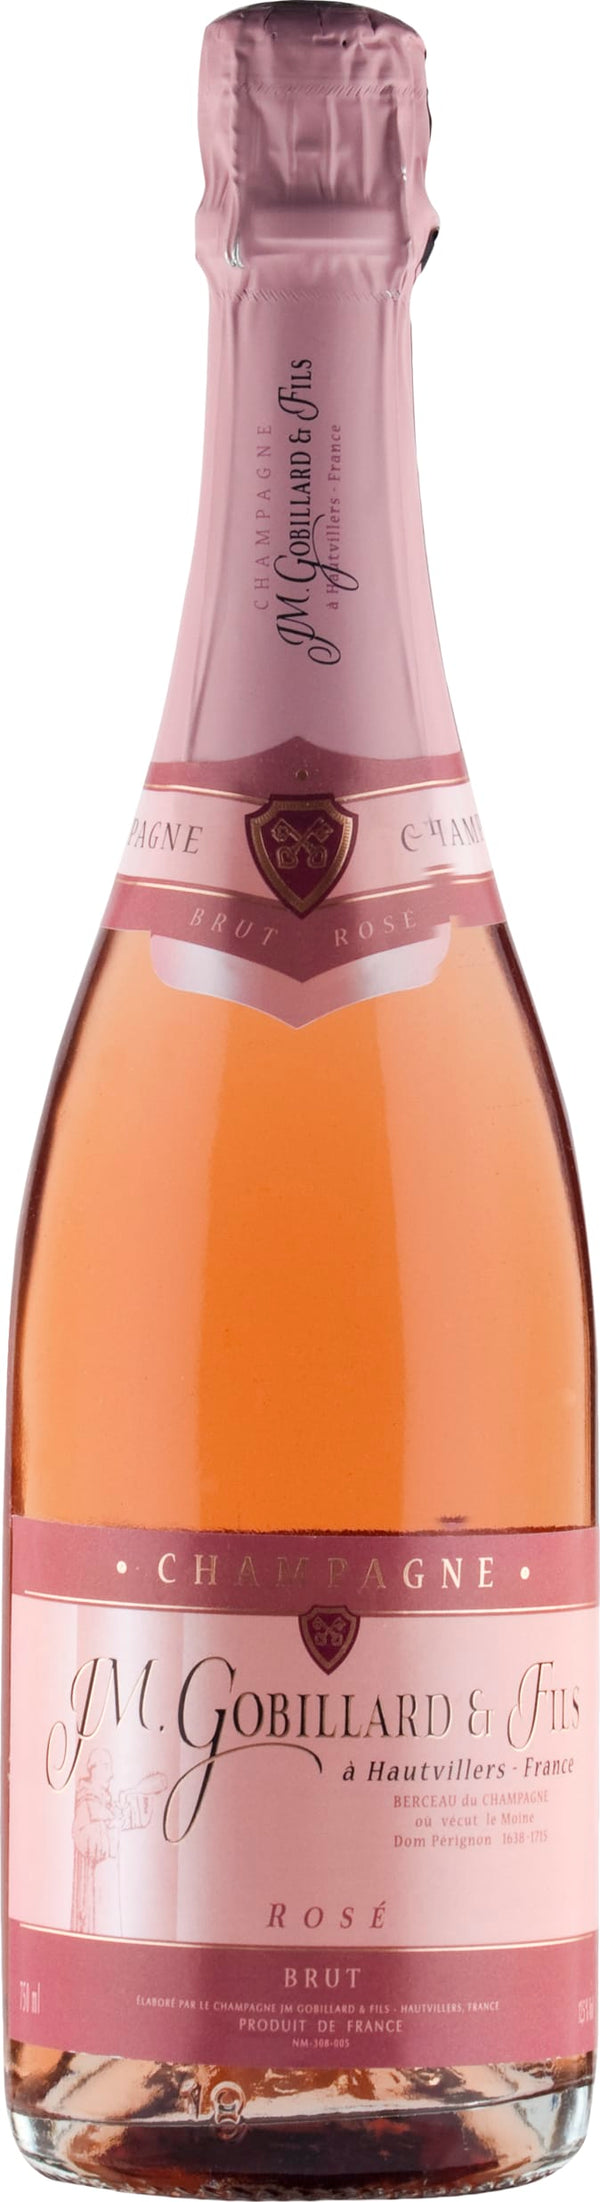 Gobillard Champagne Brut Rose NV6x75cl - Just Wines 